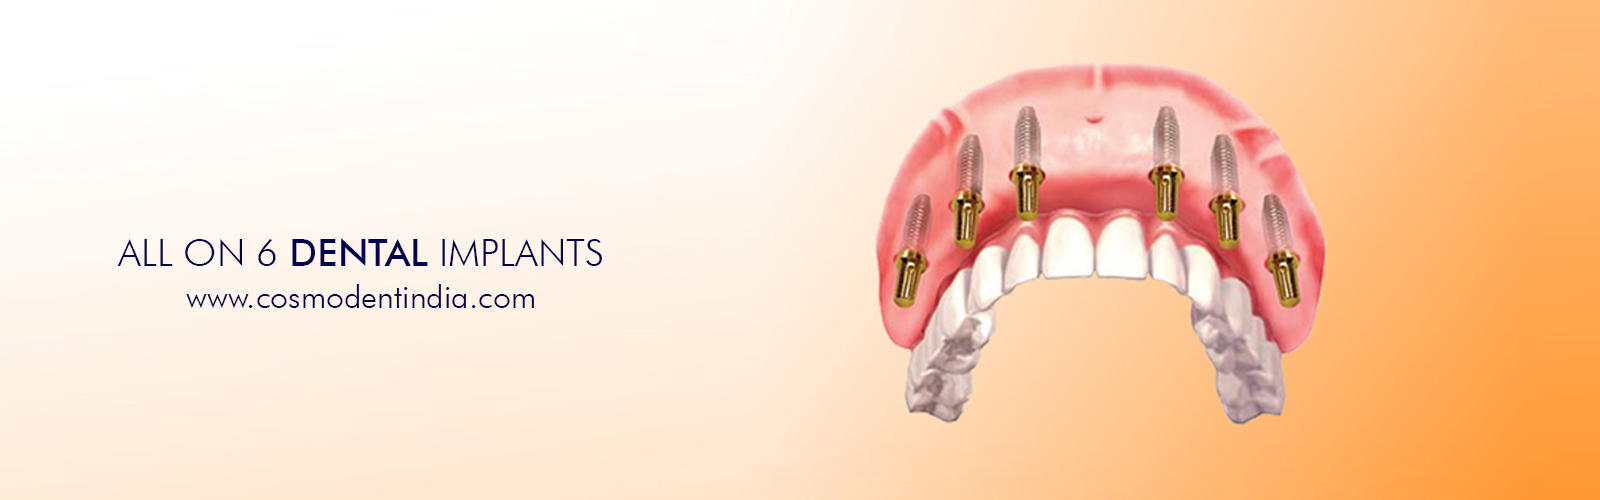 all-on-6-dental-implants-india